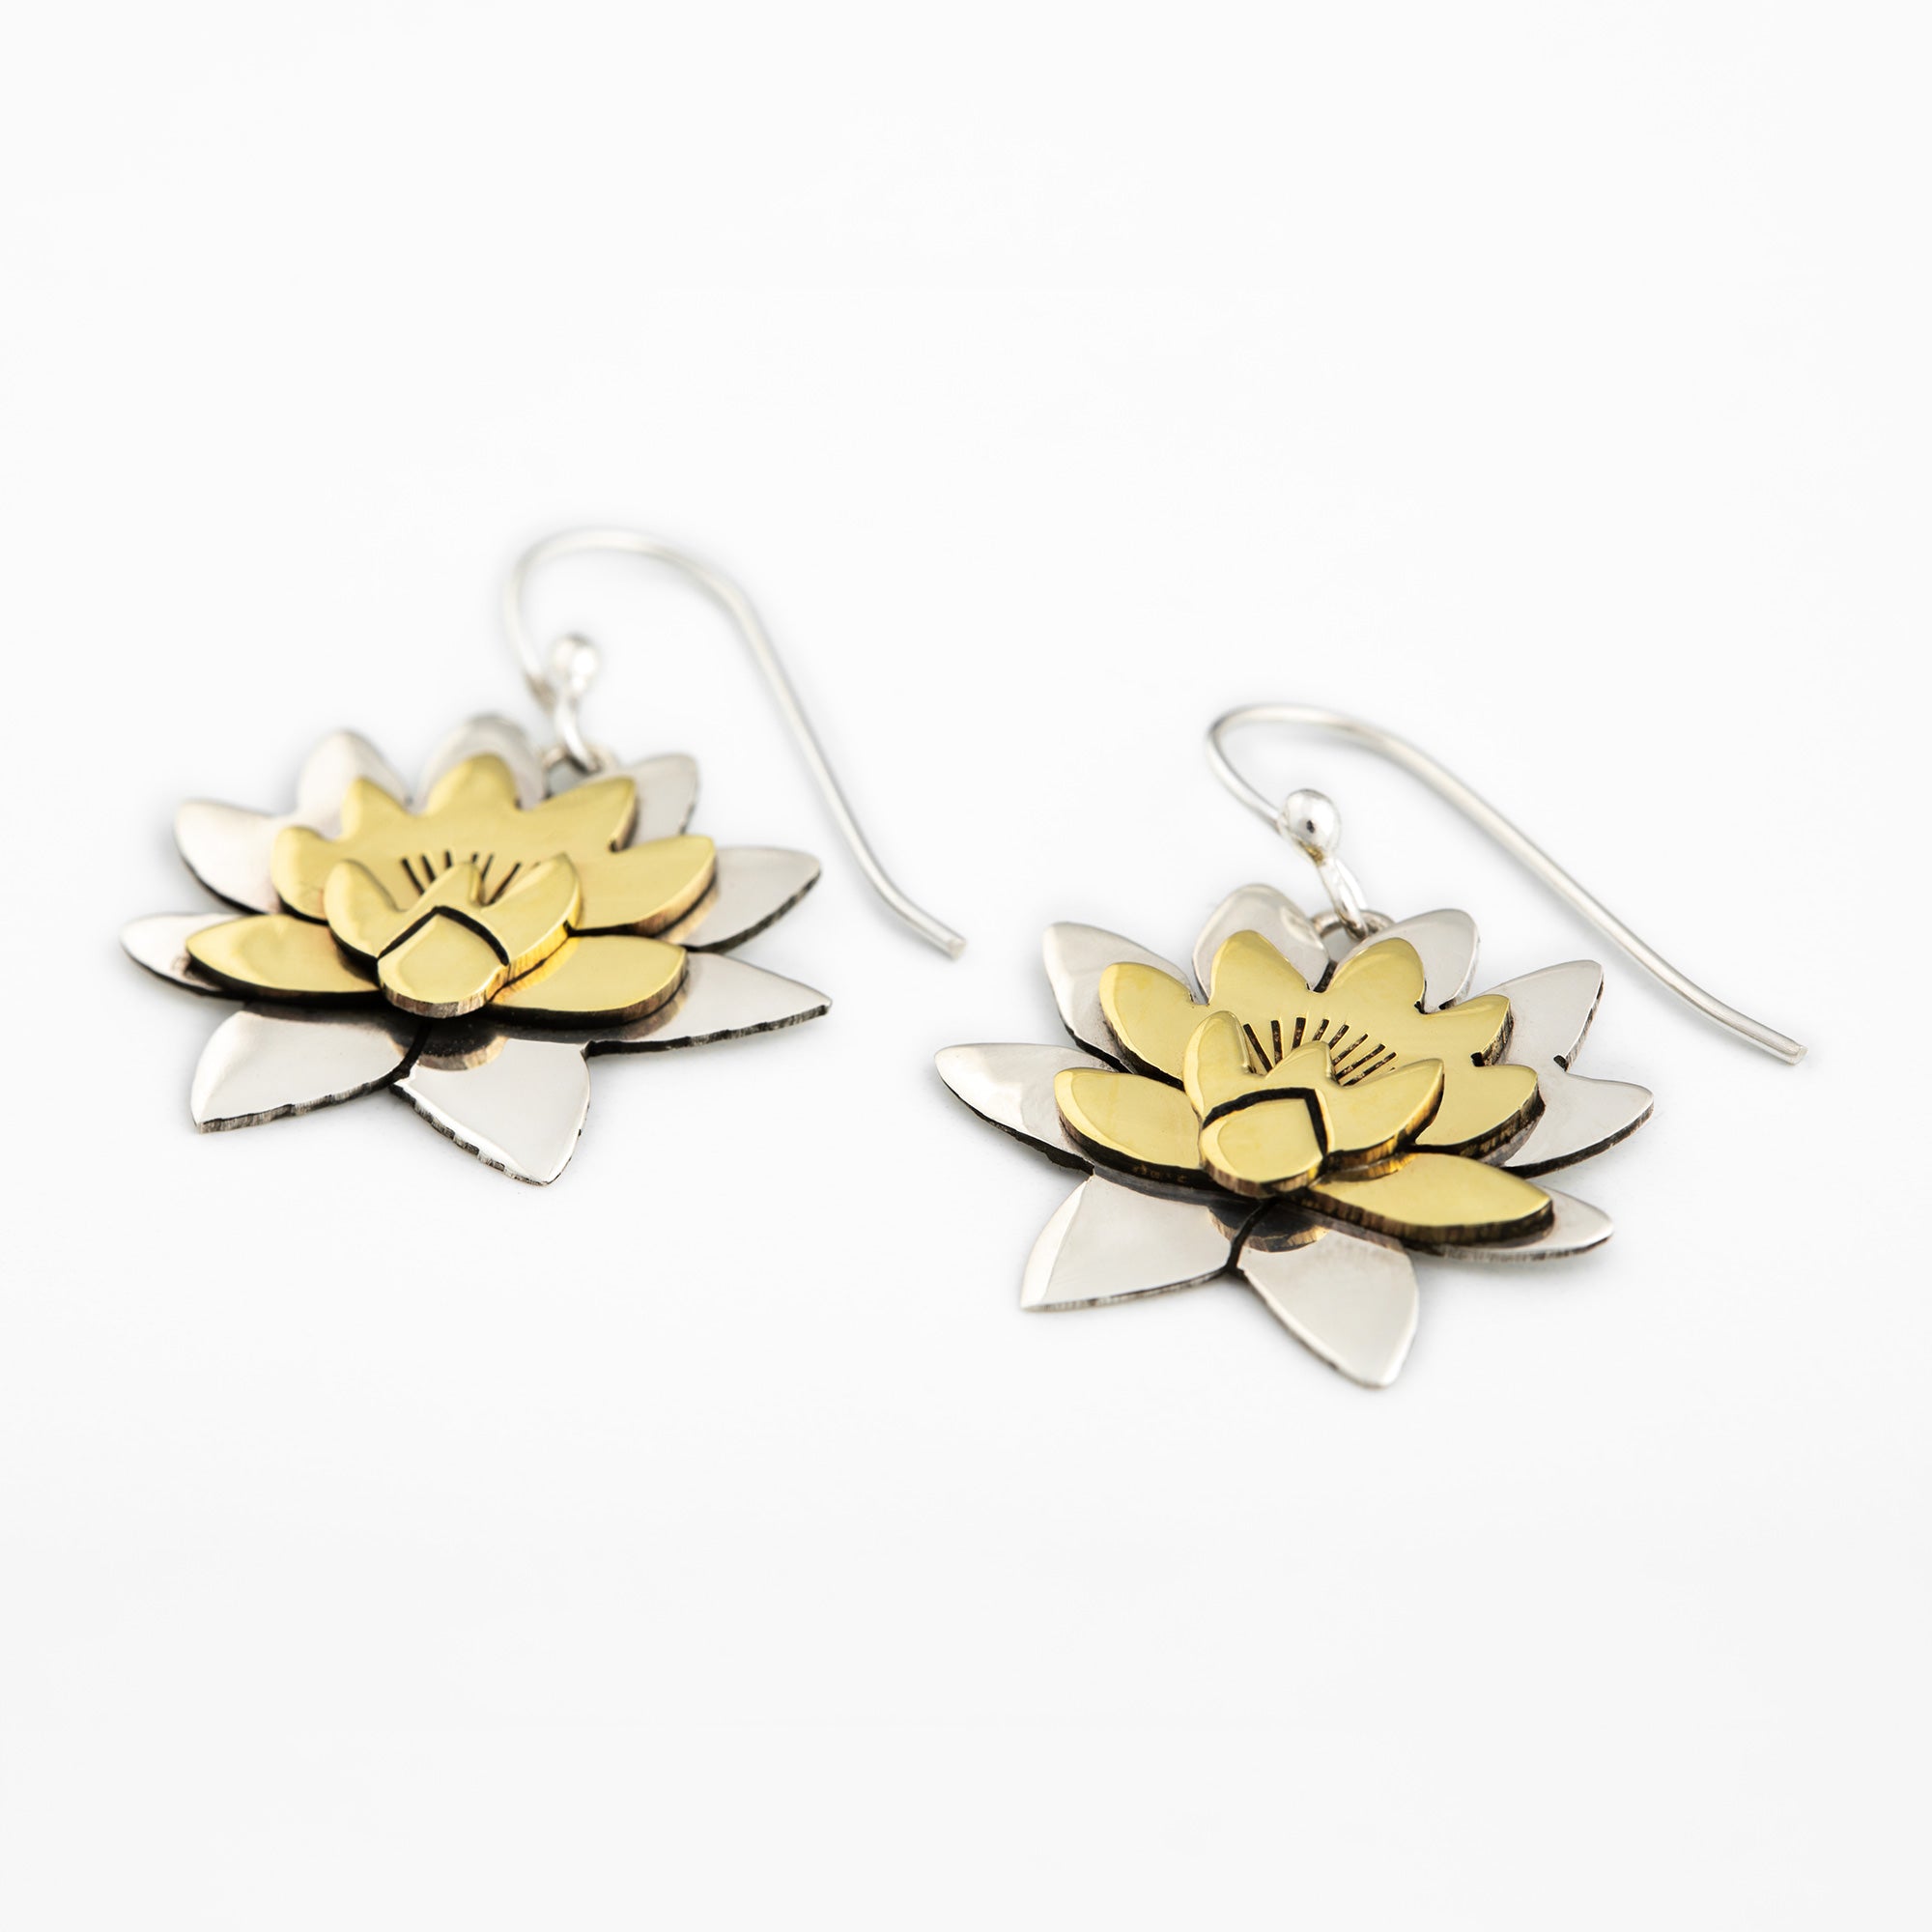 Mixed Metal Dangling Flower Earrings - Water Lily